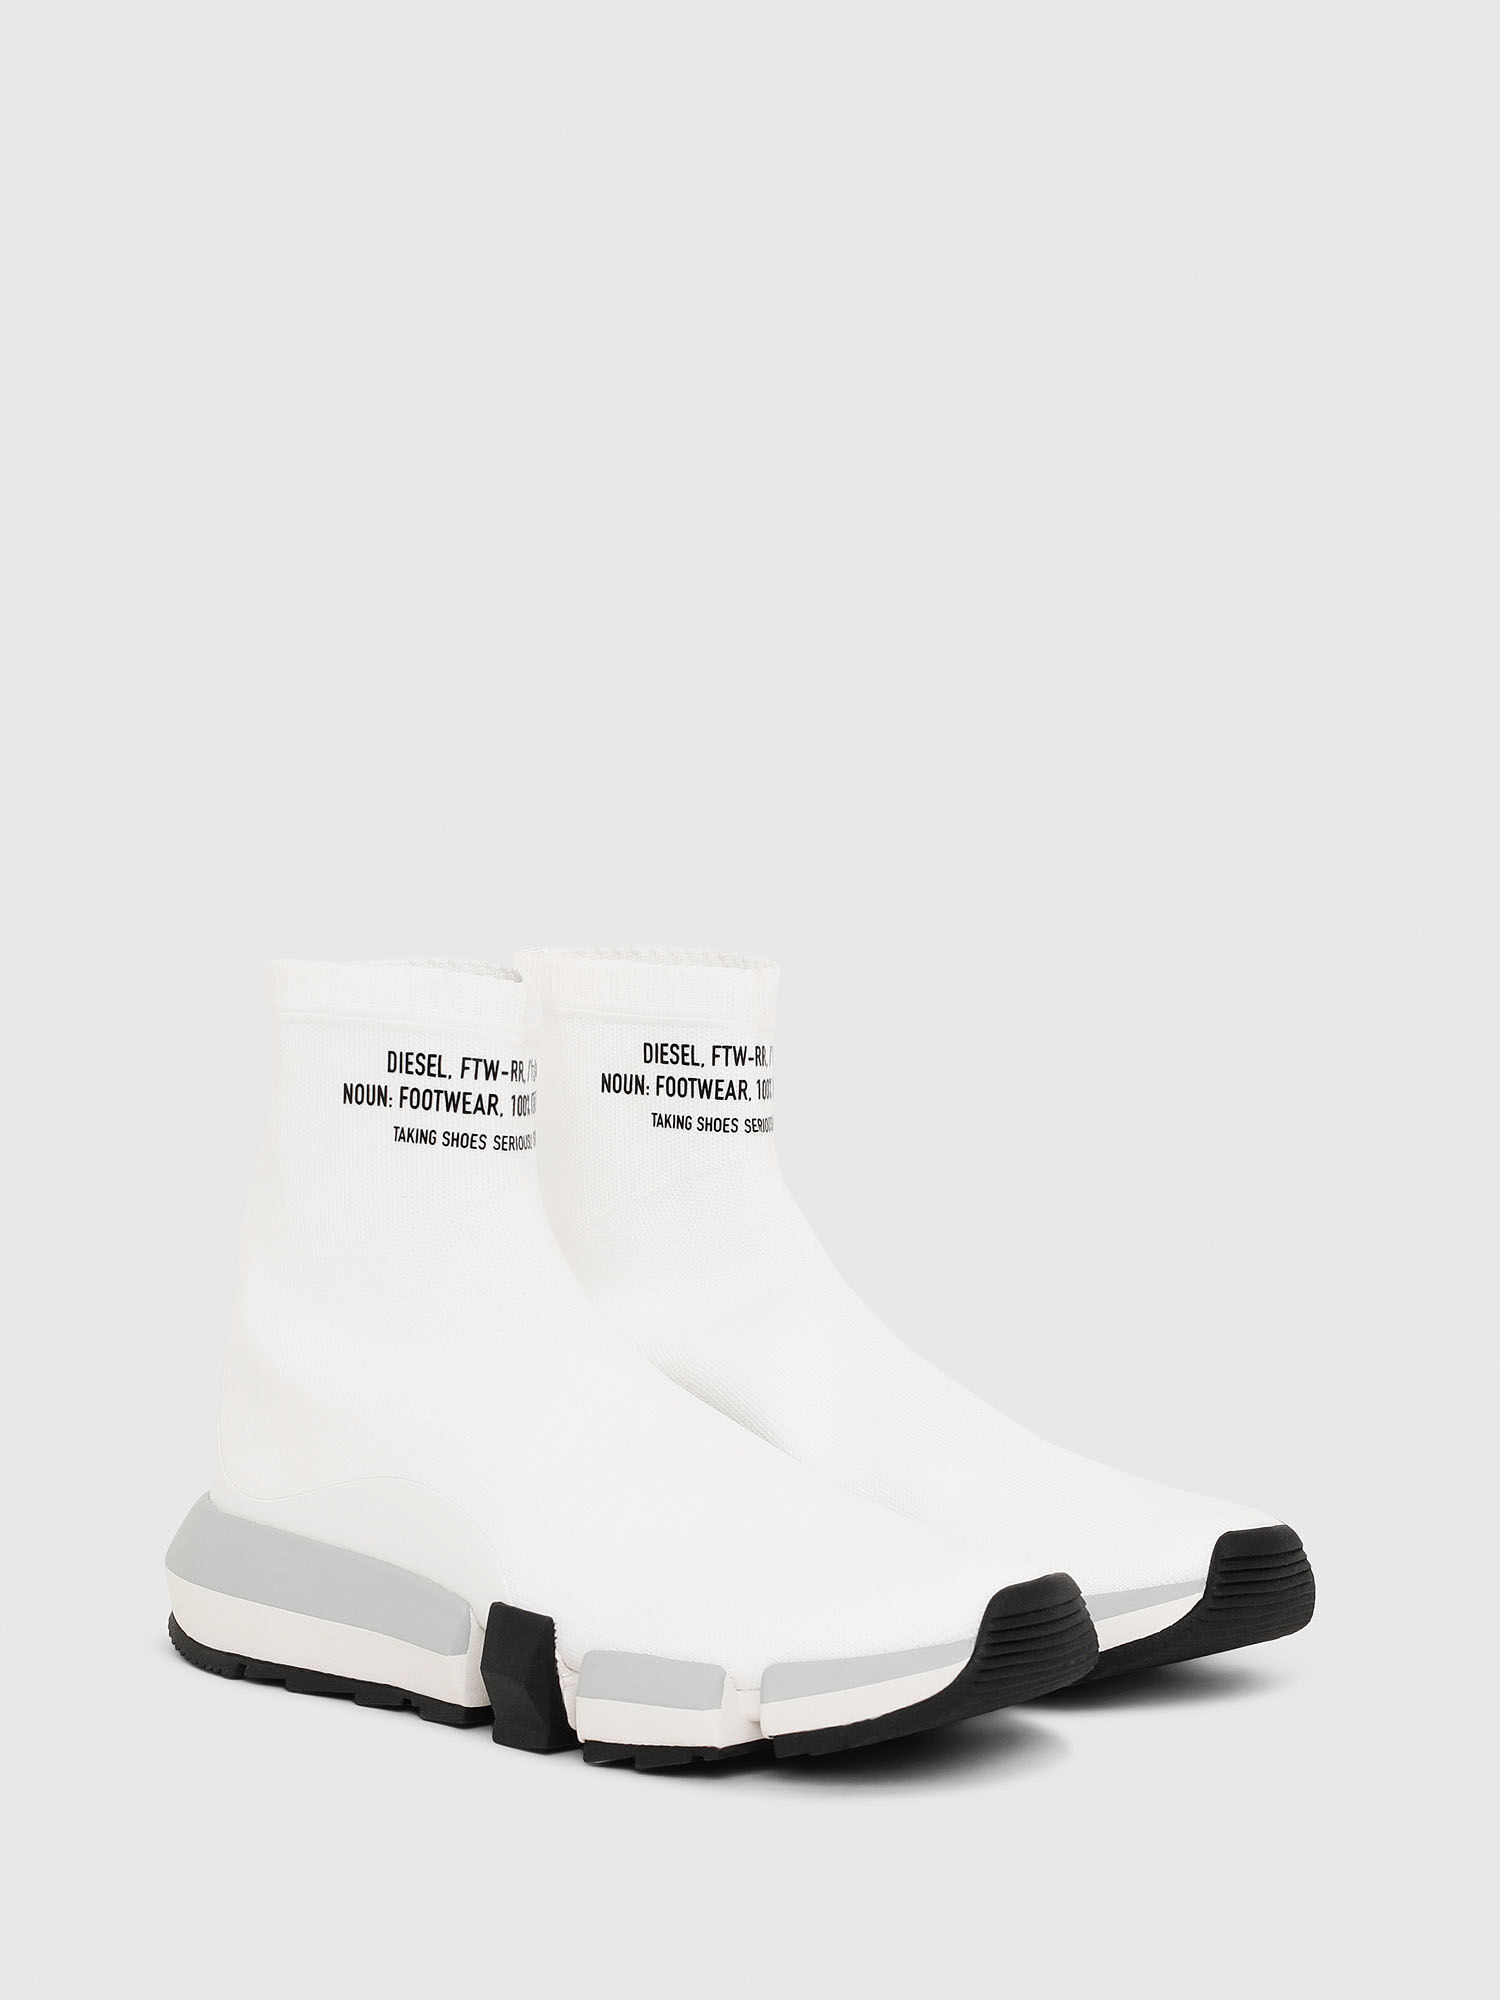 sock sneakers white